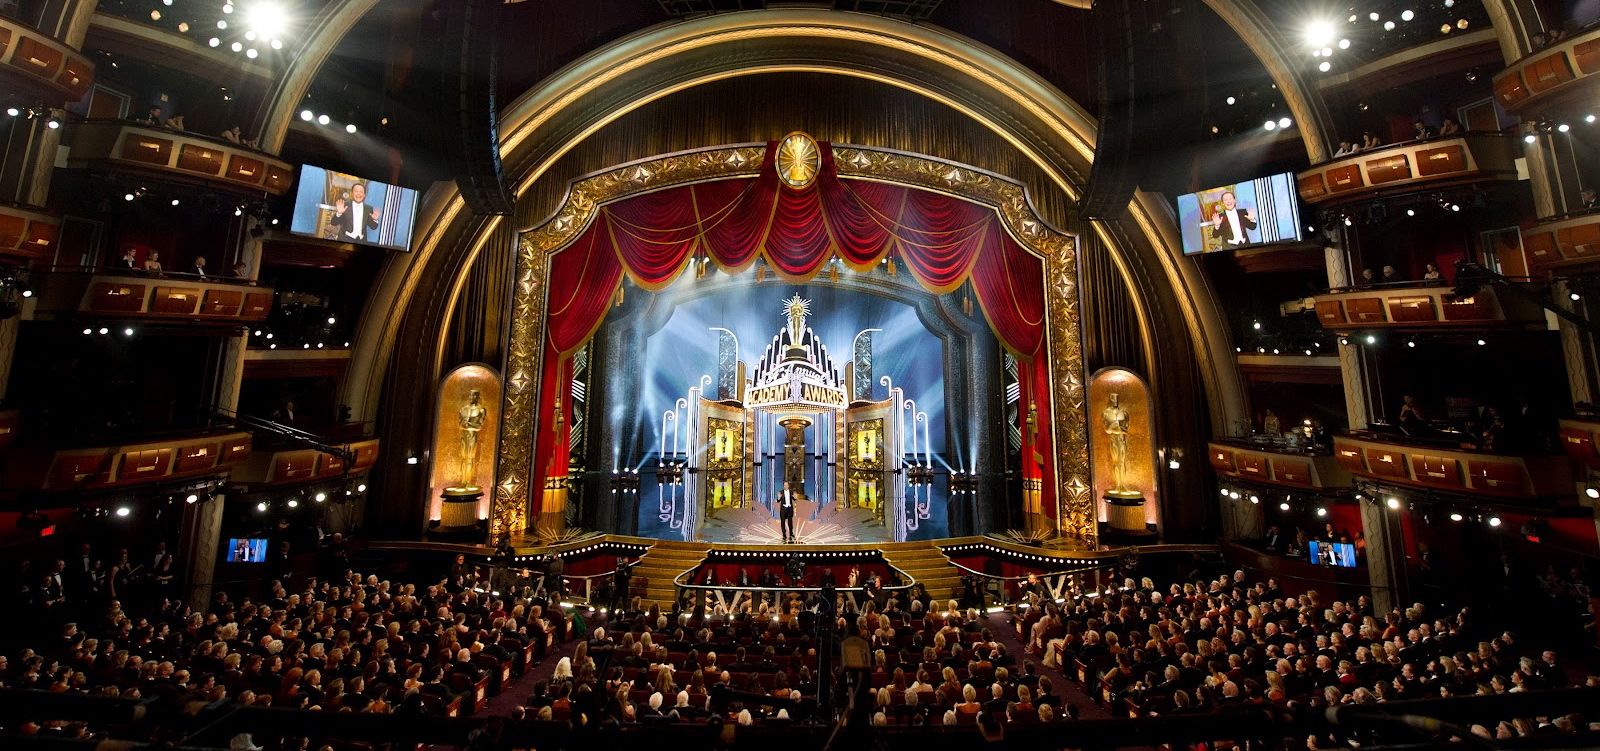 A Fanatic Offers 2013 Oscar Predictions